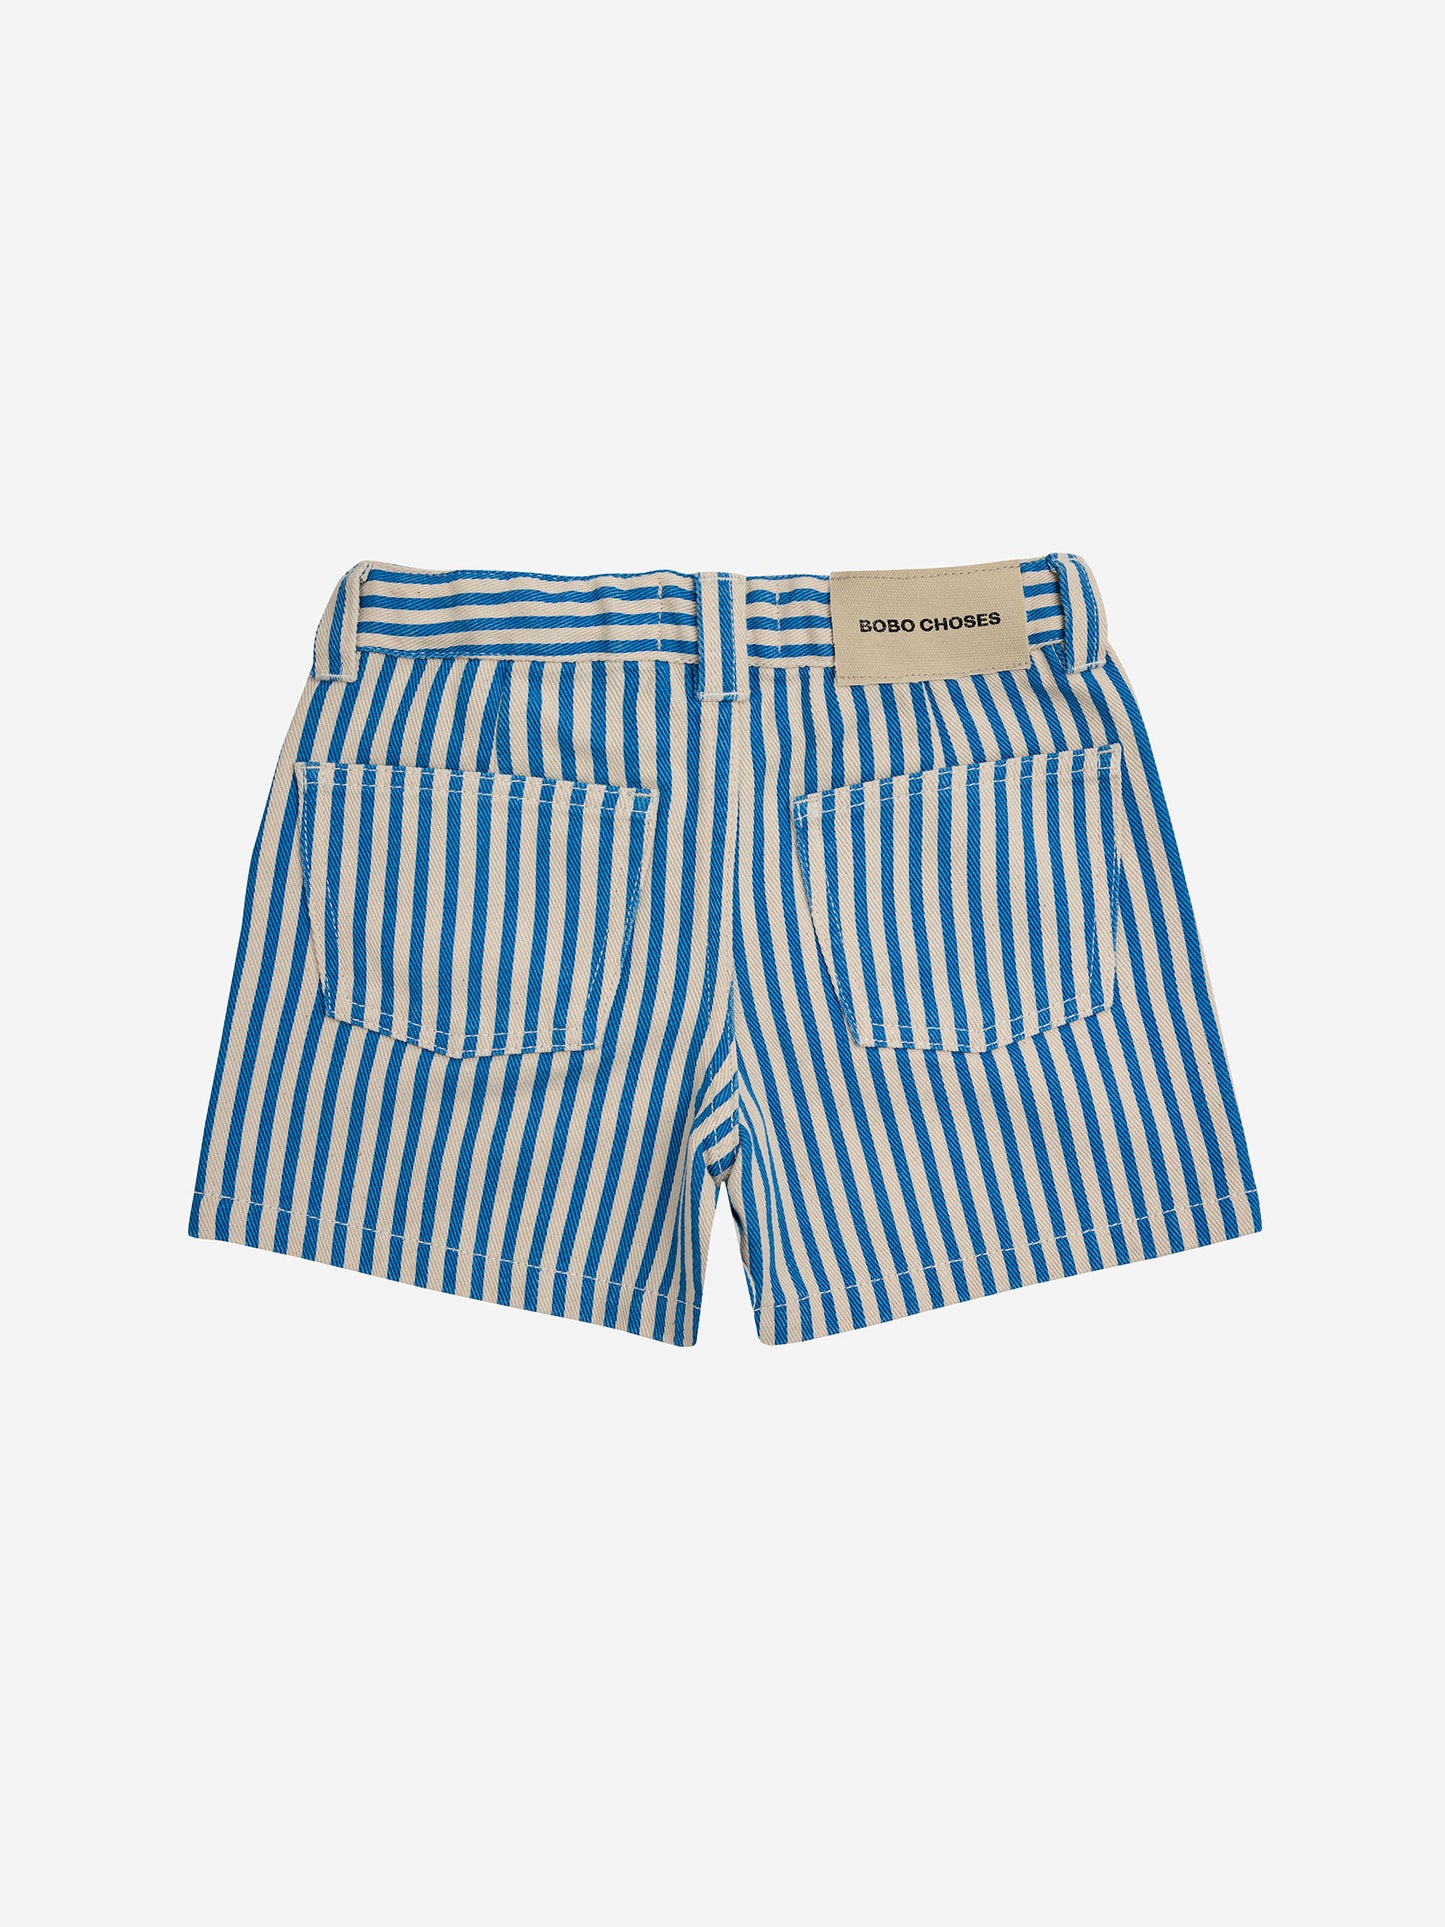 Bobo Choses Circle stripes woven shorts